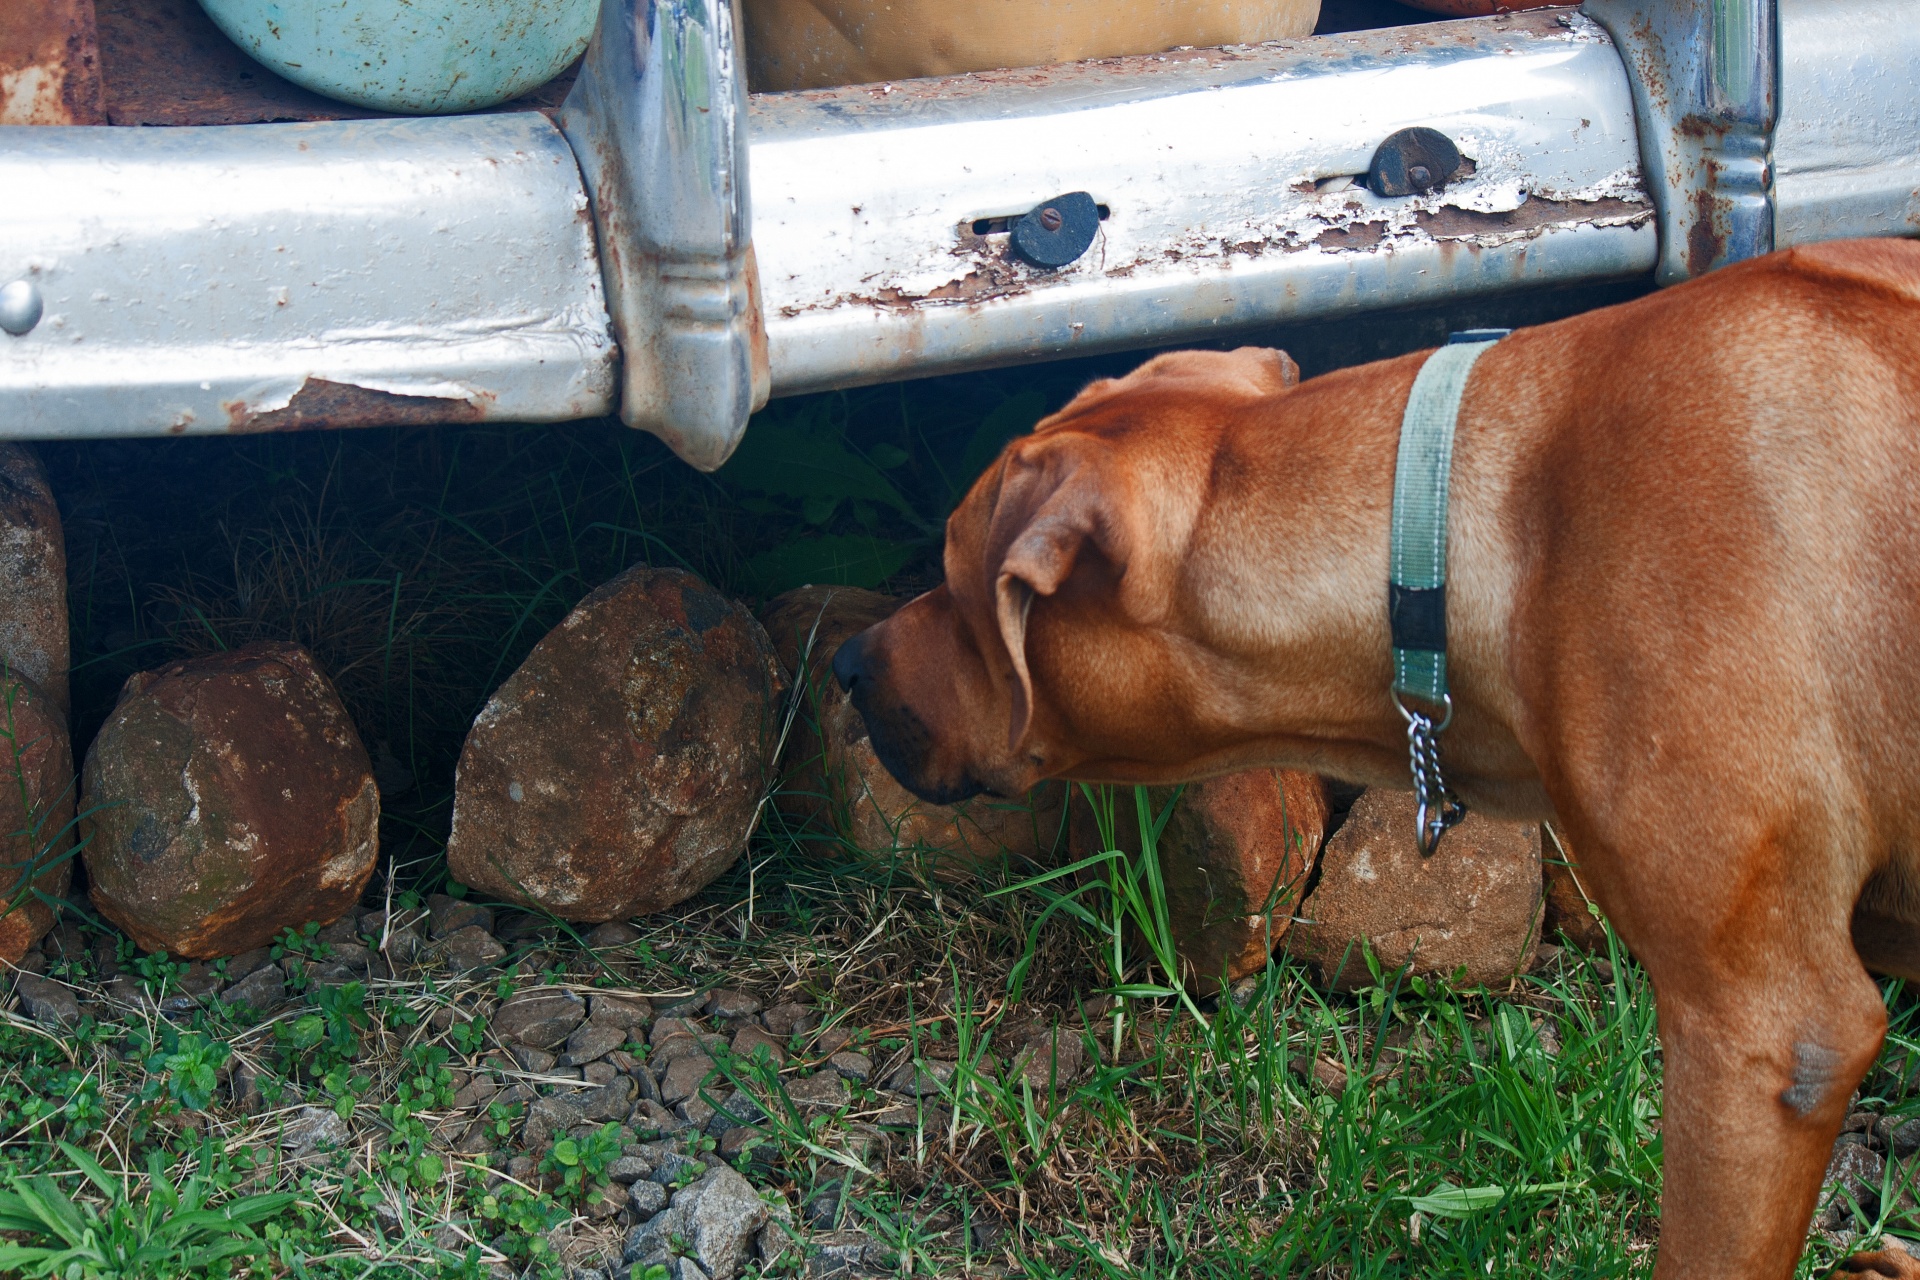 Bruine hond gluren onder oude auto